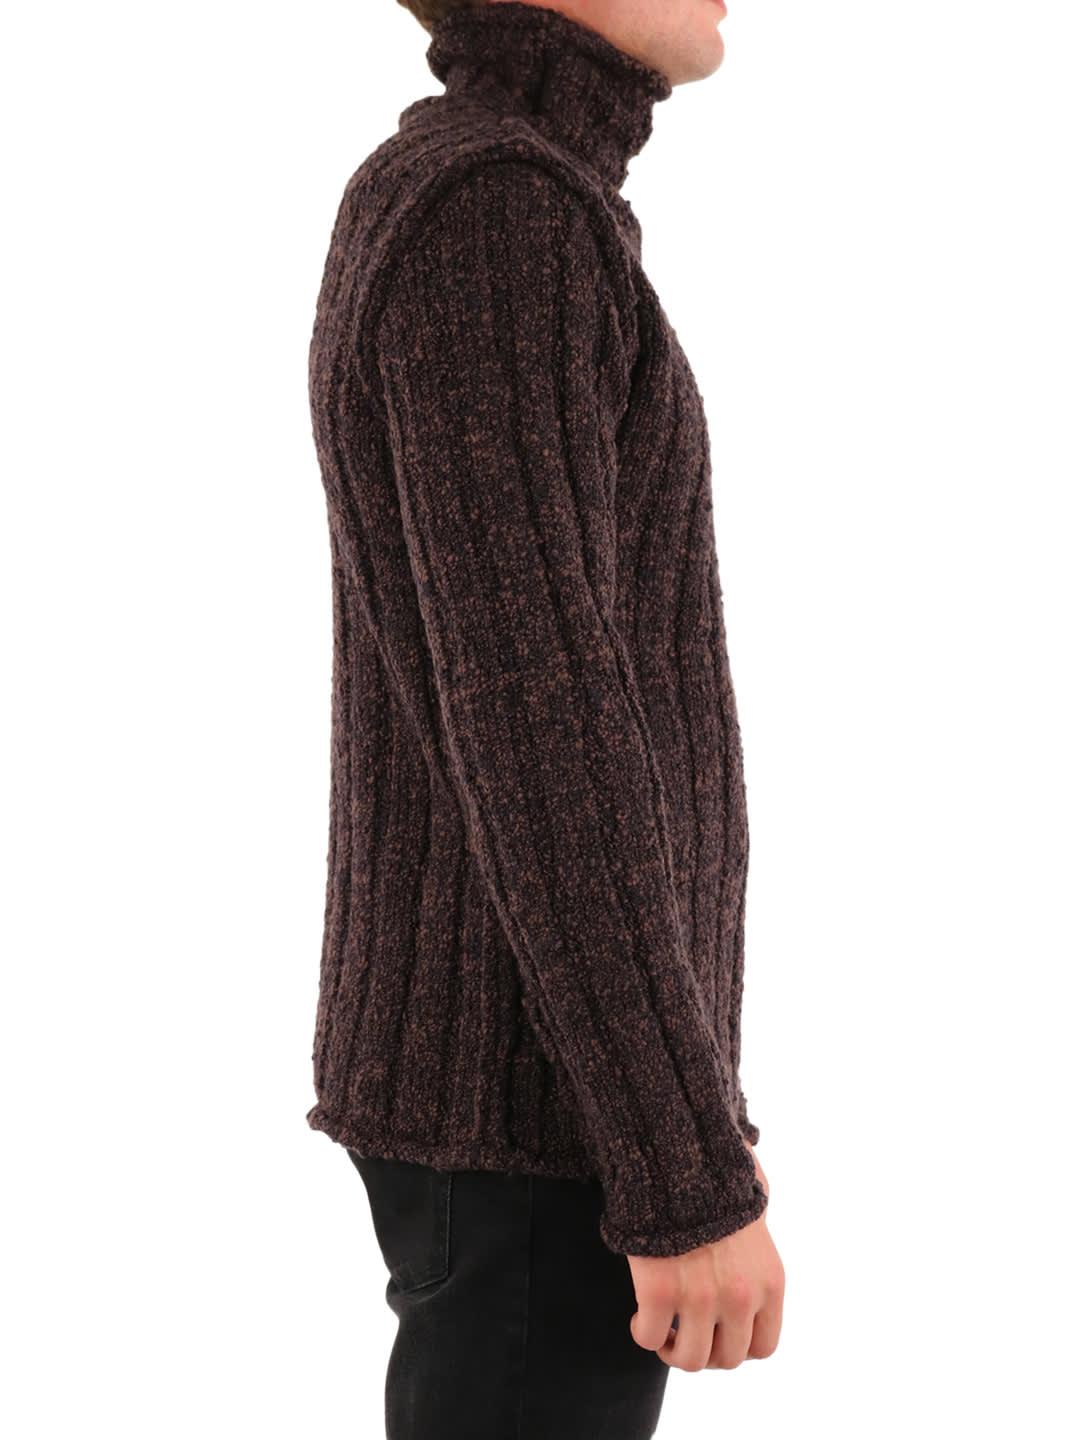 Dolce & Gabbana Wool Turtleneck Sweater in Brown for Men - Save 30 